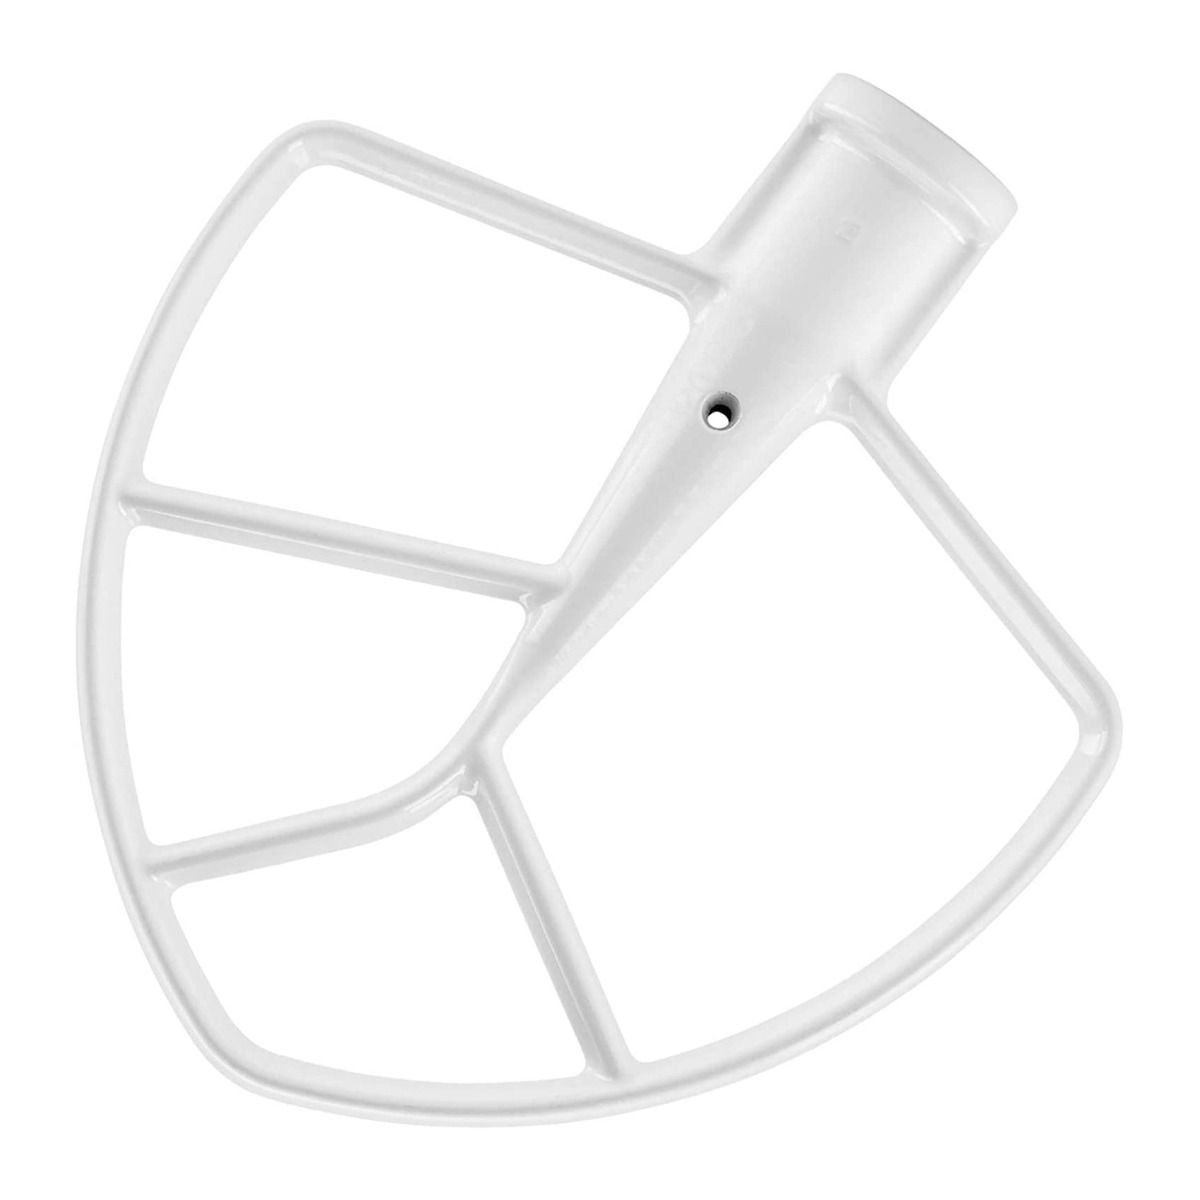 Beaterblade For Kitchenaid Bowl Lift Mixers - White (6 Quart) : Target